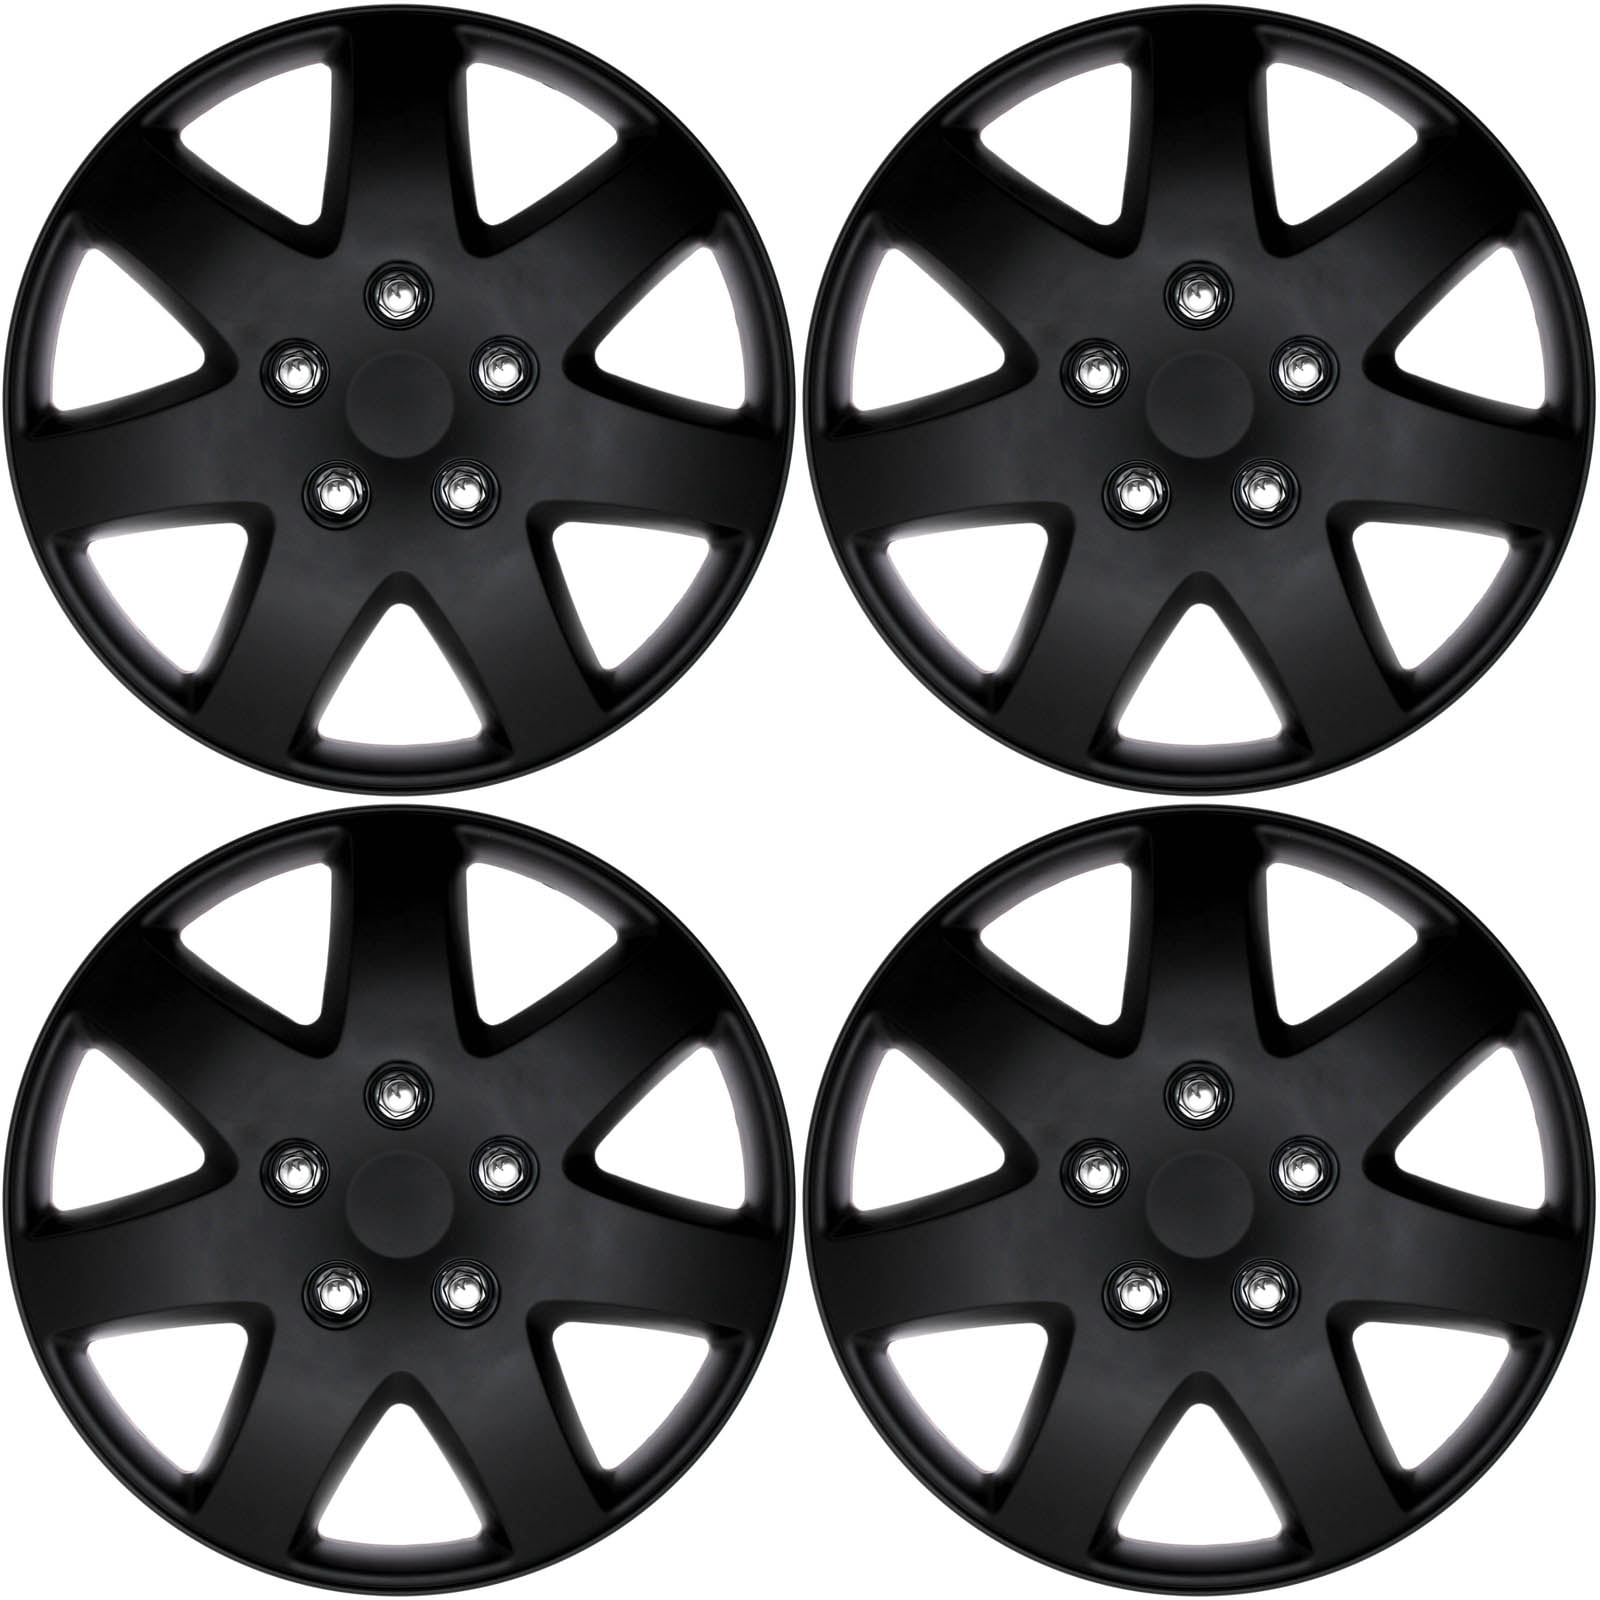 16" Inch Hub Cap Wheel Rim Cover Black & Black for Dodge Journey 4pcs Set